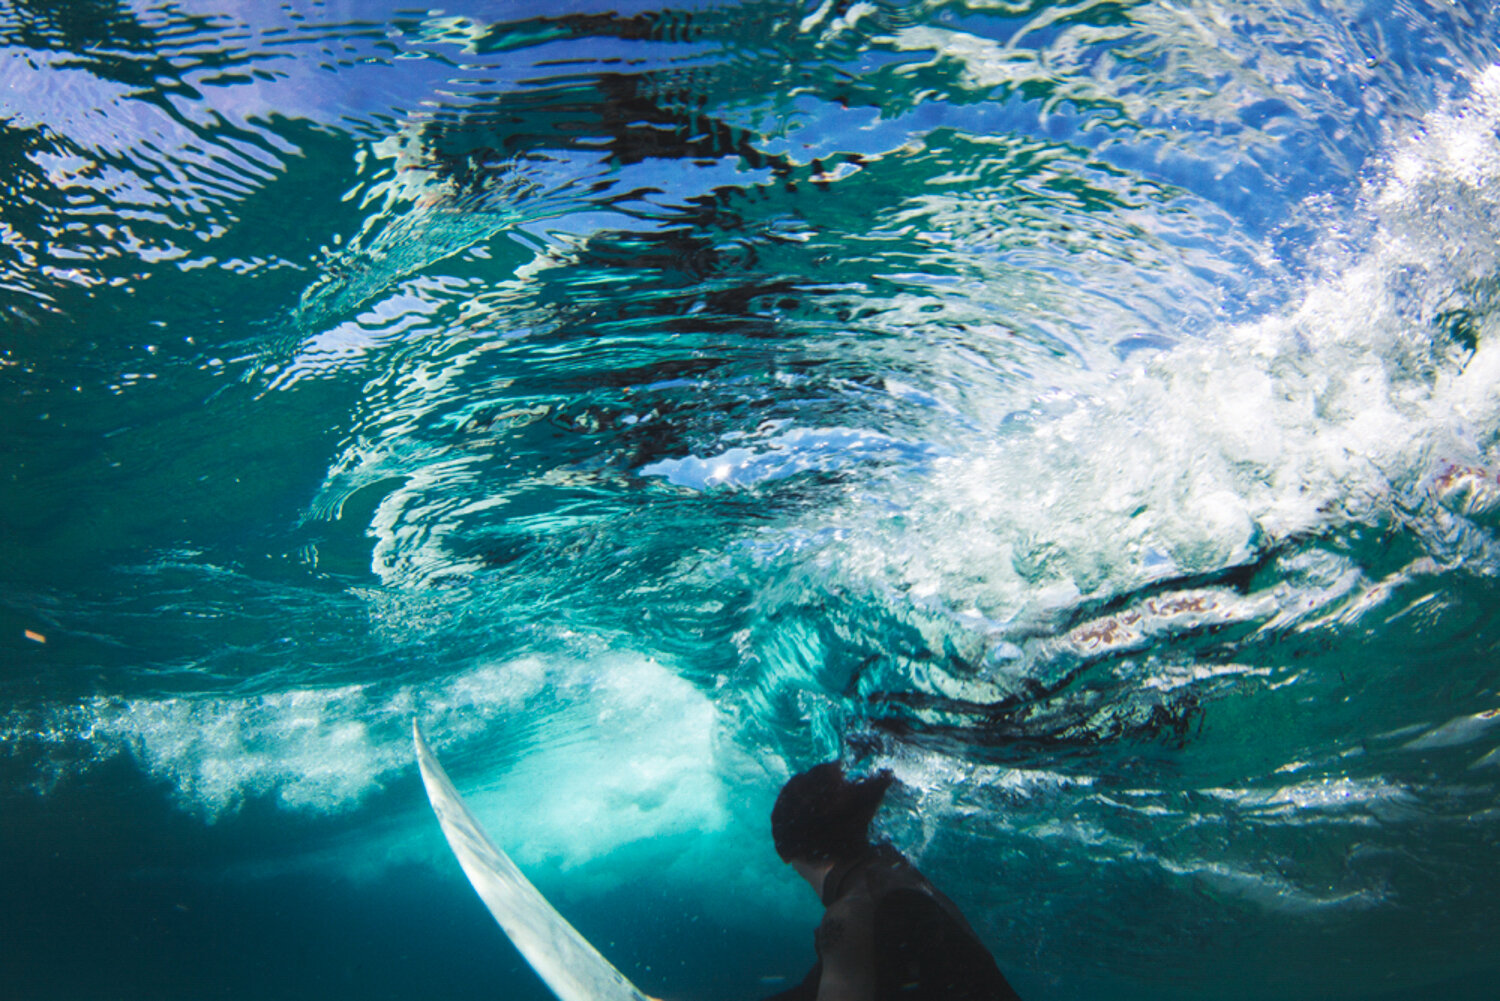 surf surfing lifestyle ocean beach nature photography photographer krista espino underwater travel corse corsica island mediterranean sea europe france french photographe-23.jpg